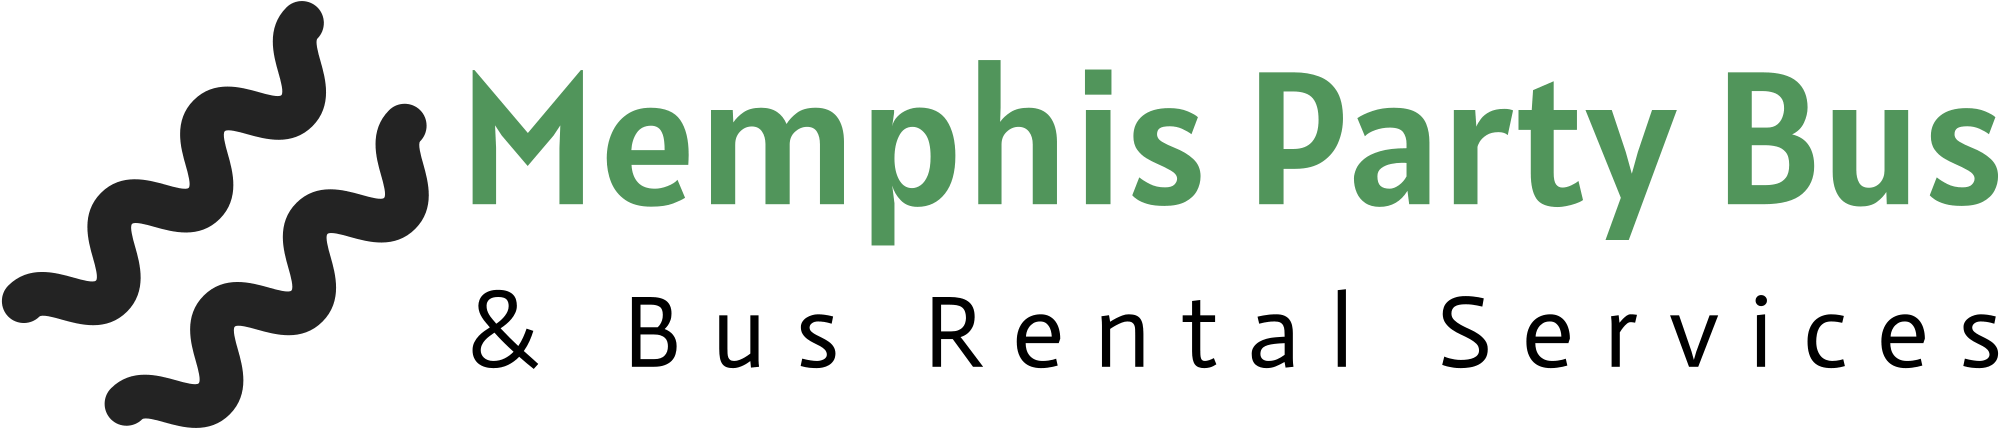 Memphis Party Bus Company logo